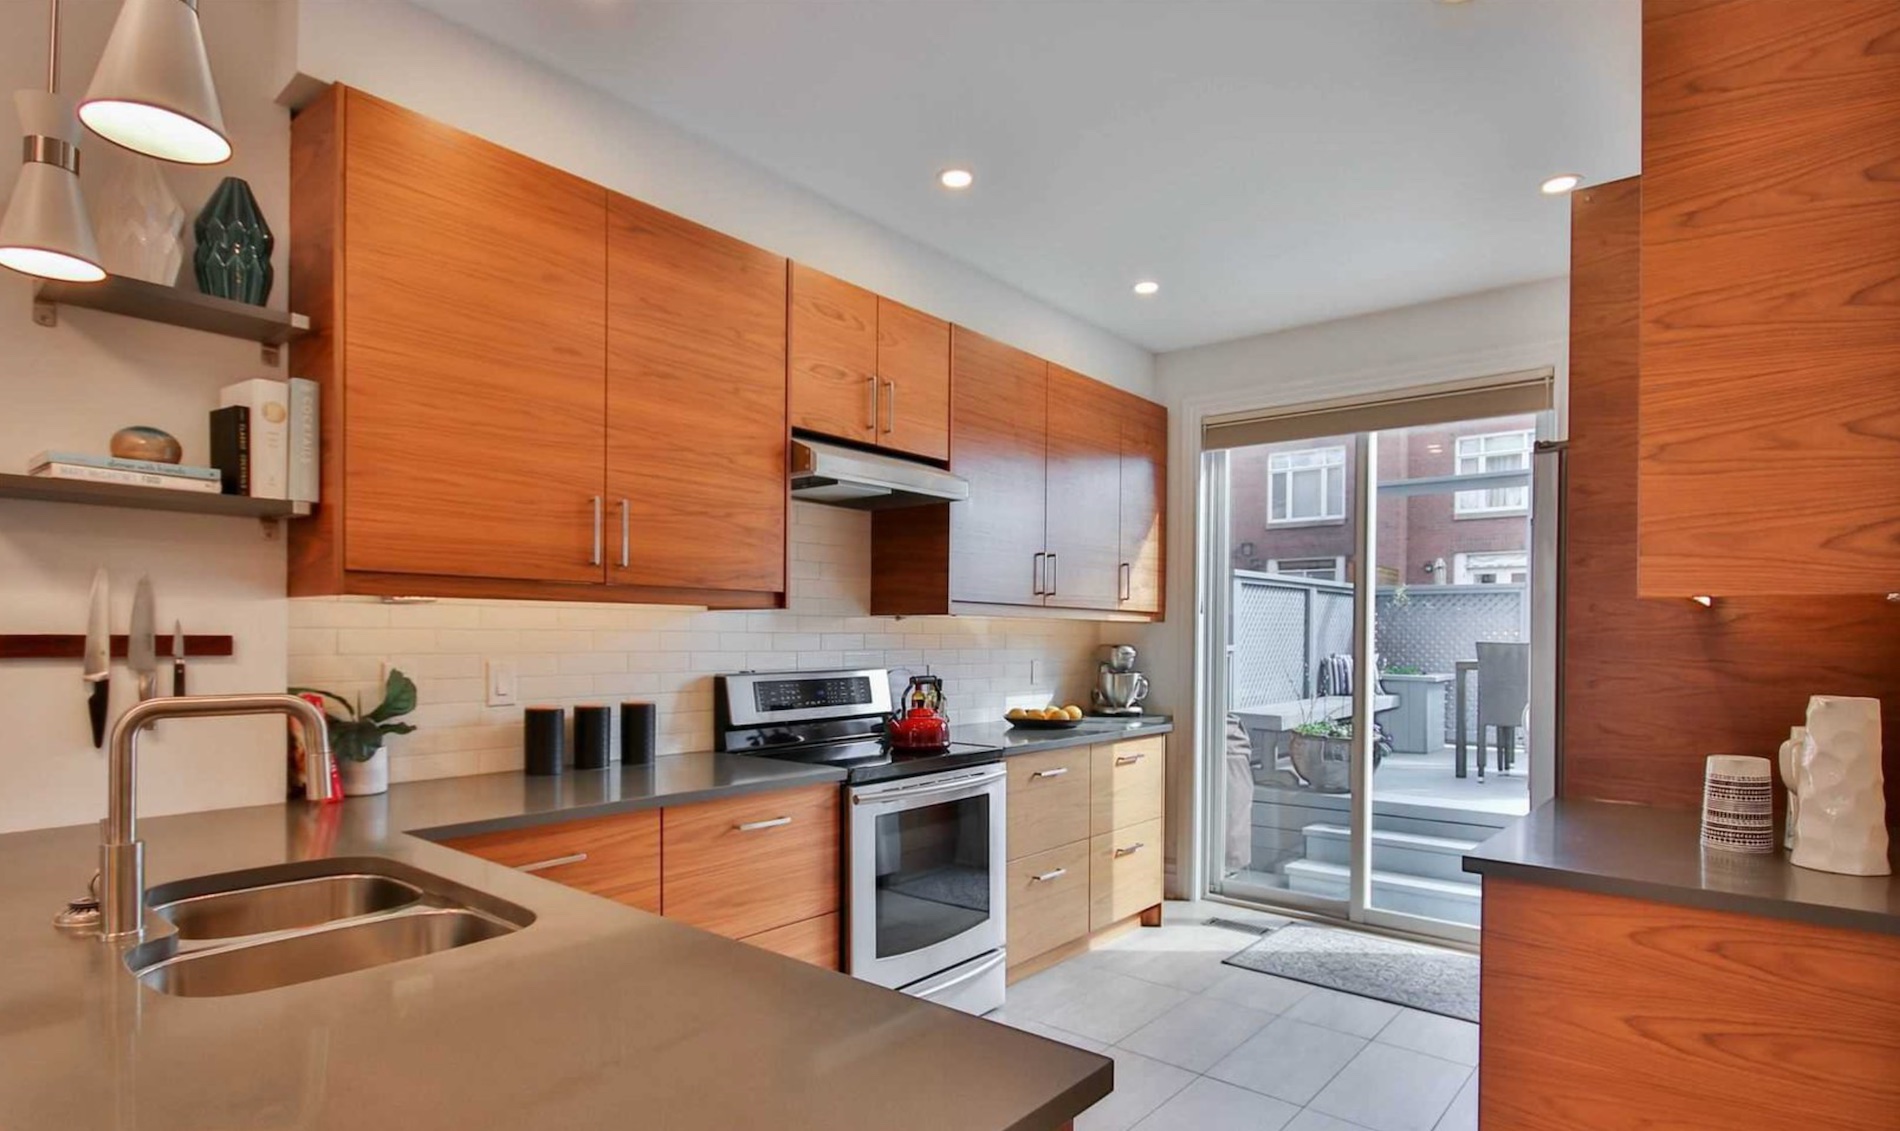 East York Ave. – Toronto Ikea Retrofit Kitchen Renovation - Featured Image